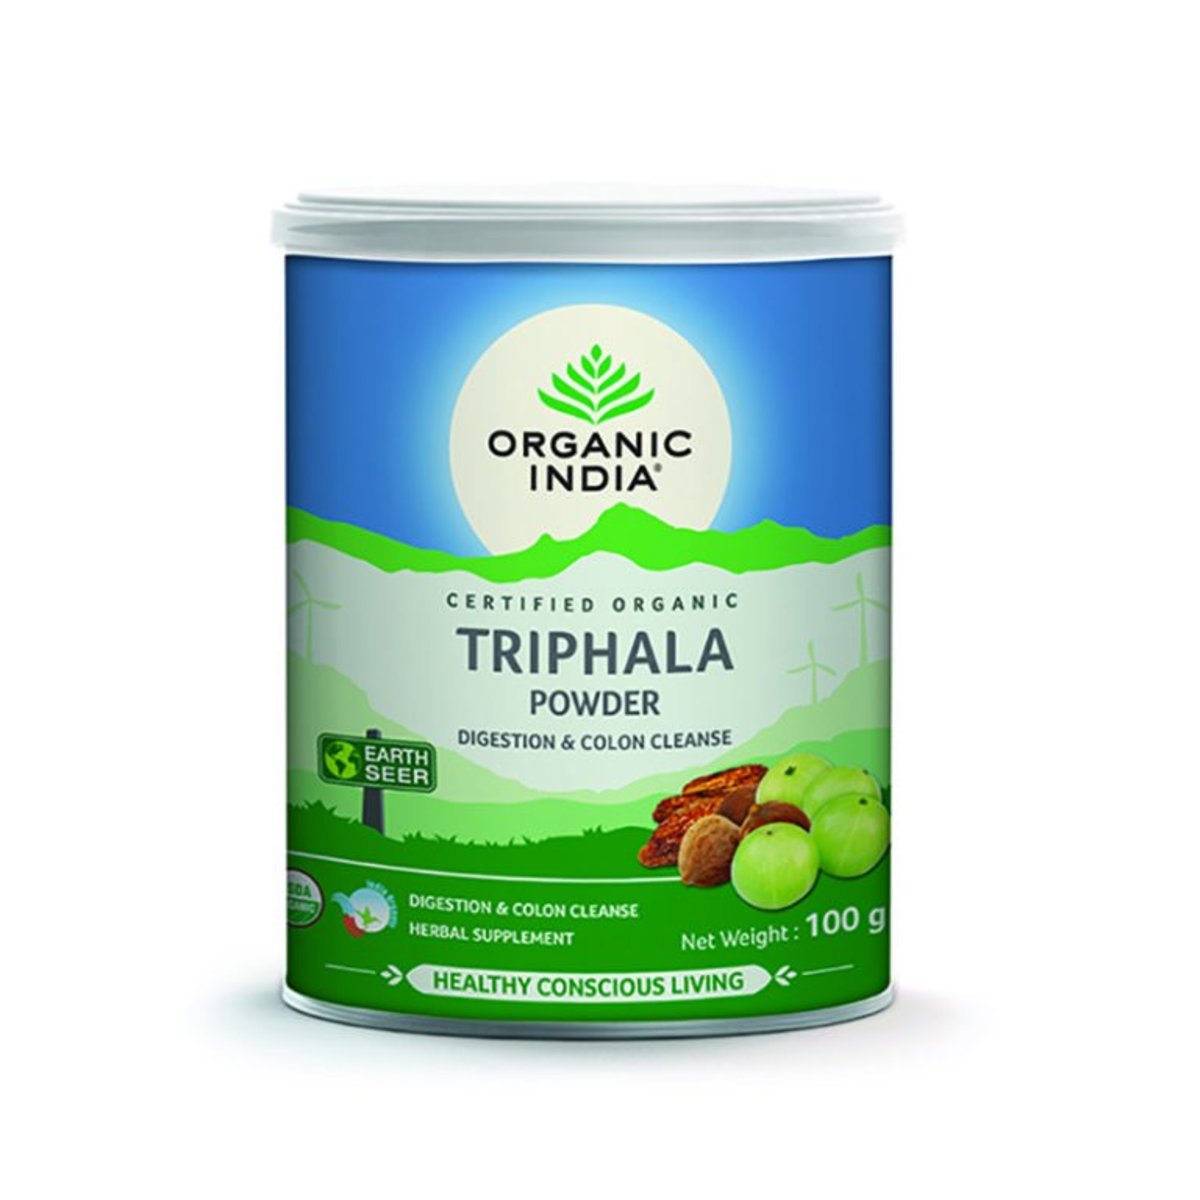 Organic India Triphala Digestion & Colon Cleanse Powder 100g